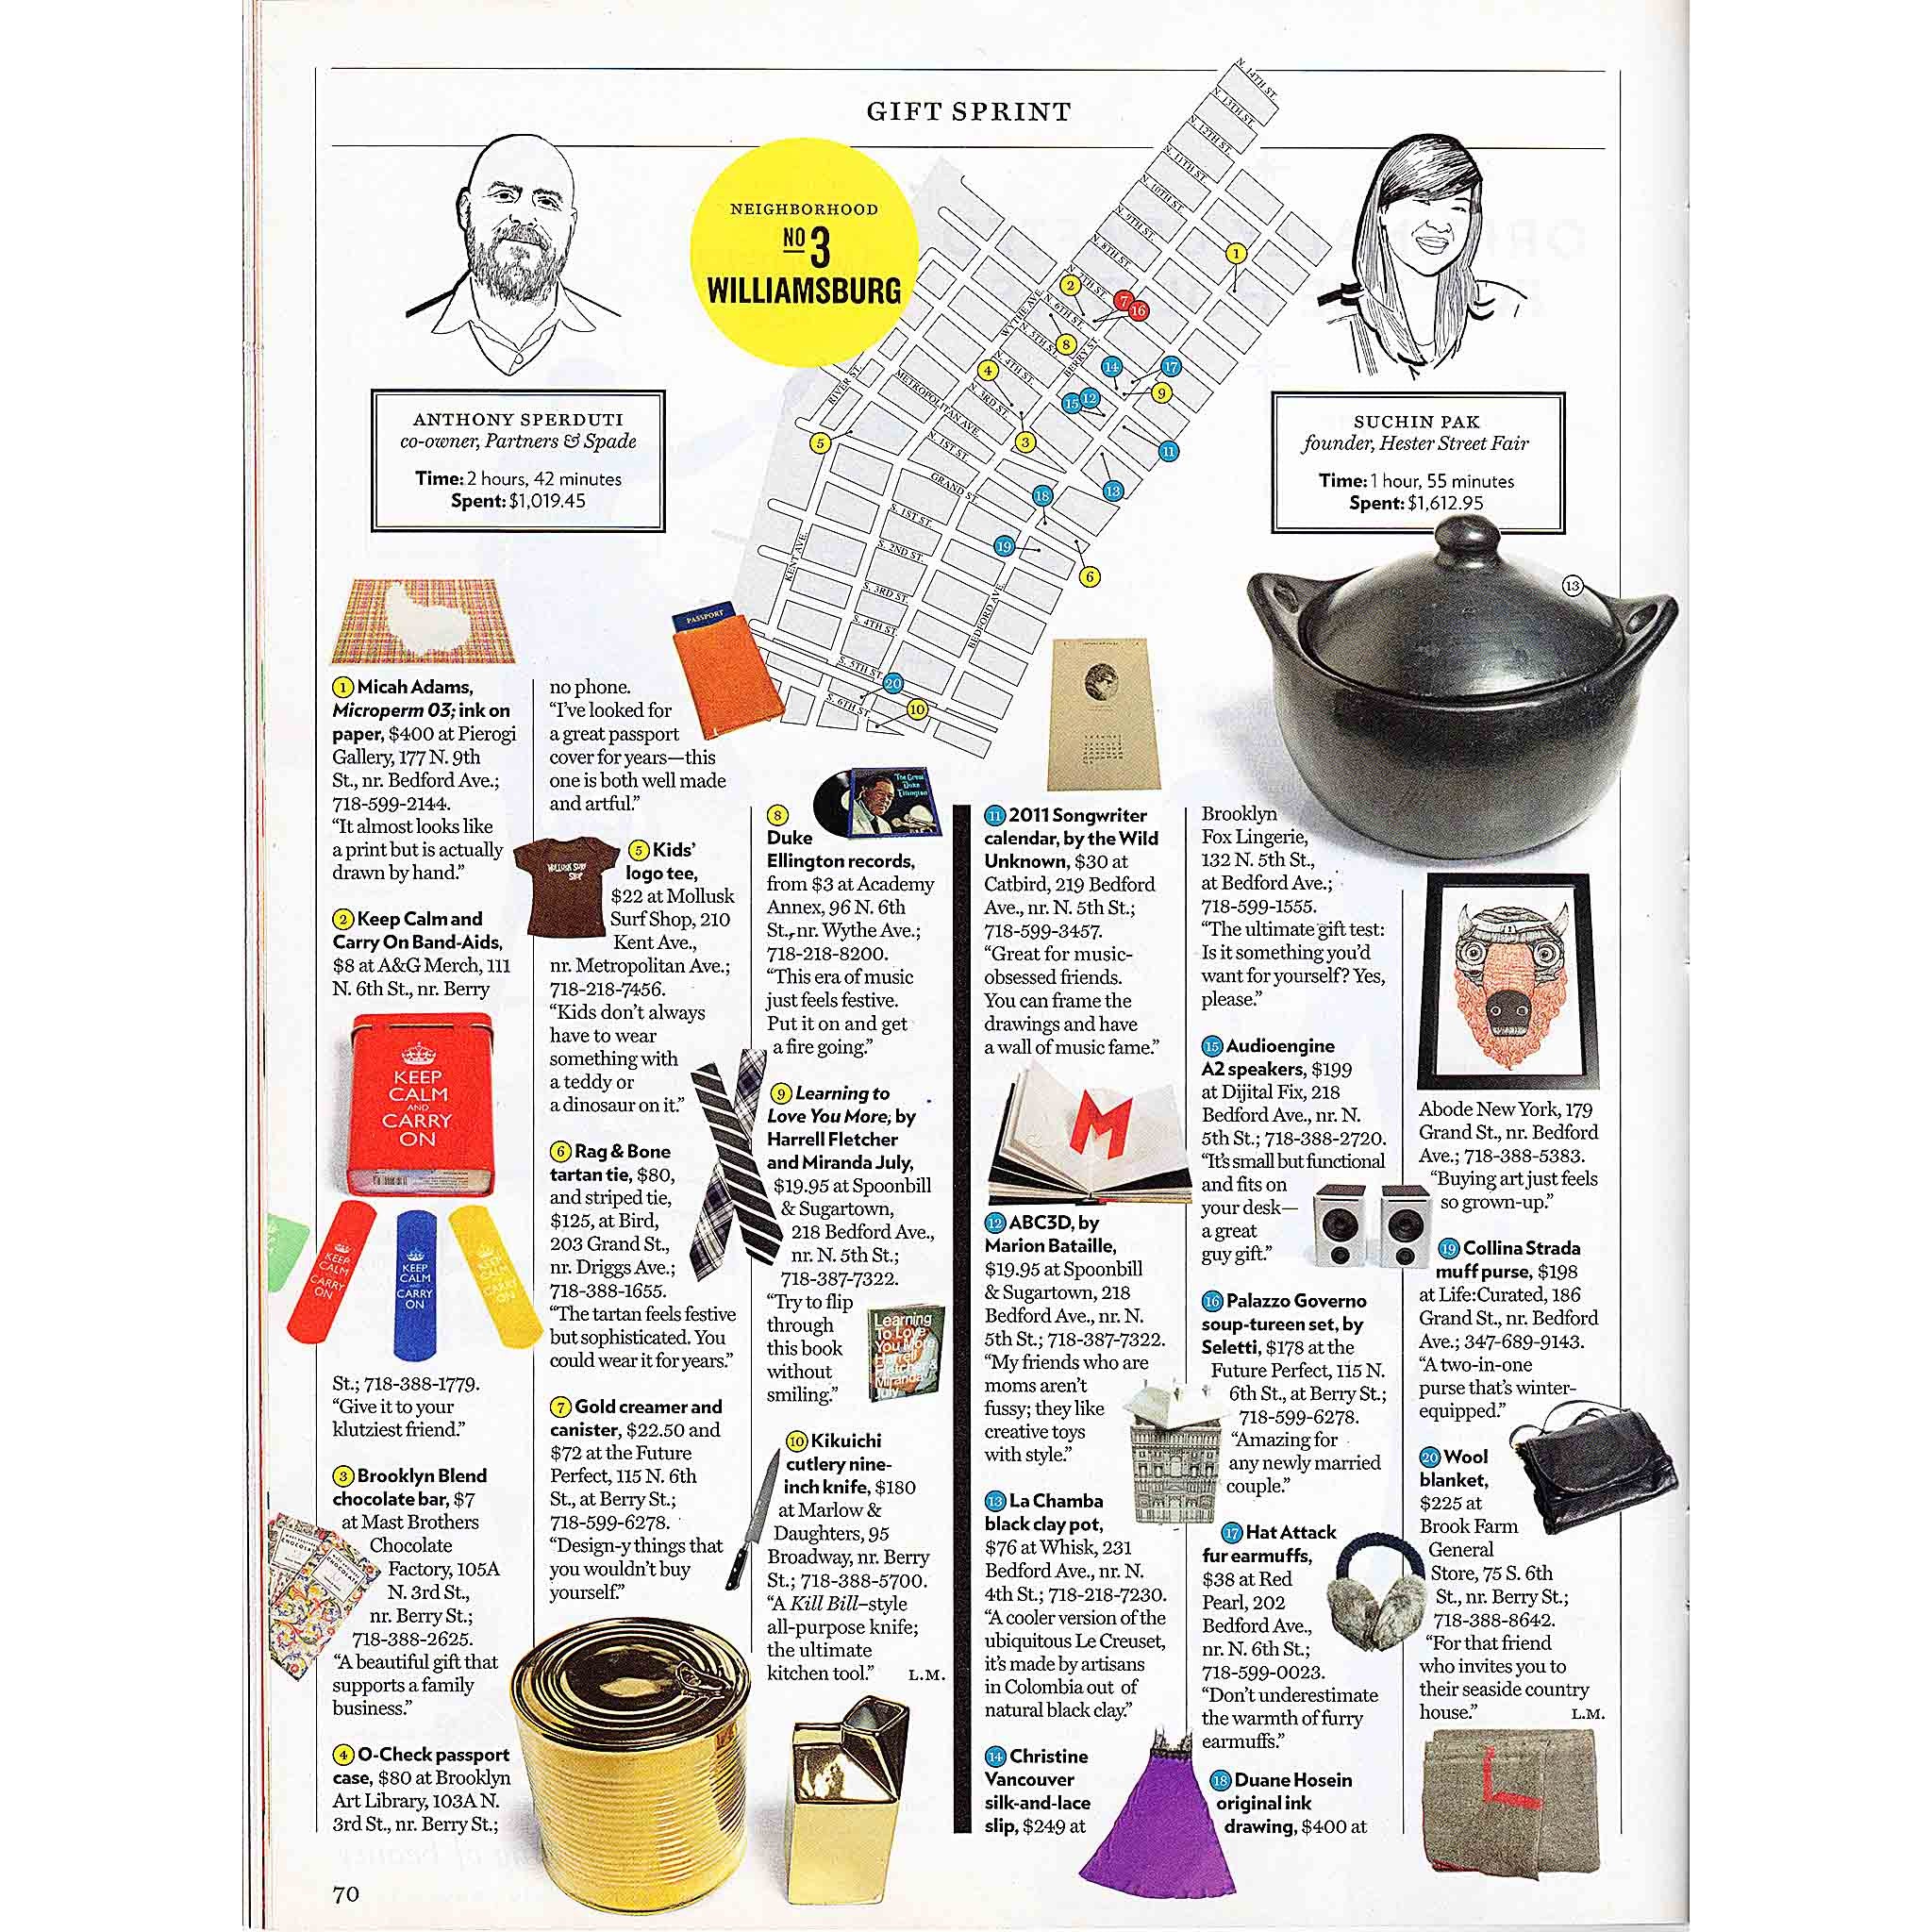 New York Magazine, 2010 All Not-So-Last-Minute Gift Guide: Suchin Pak's Picks